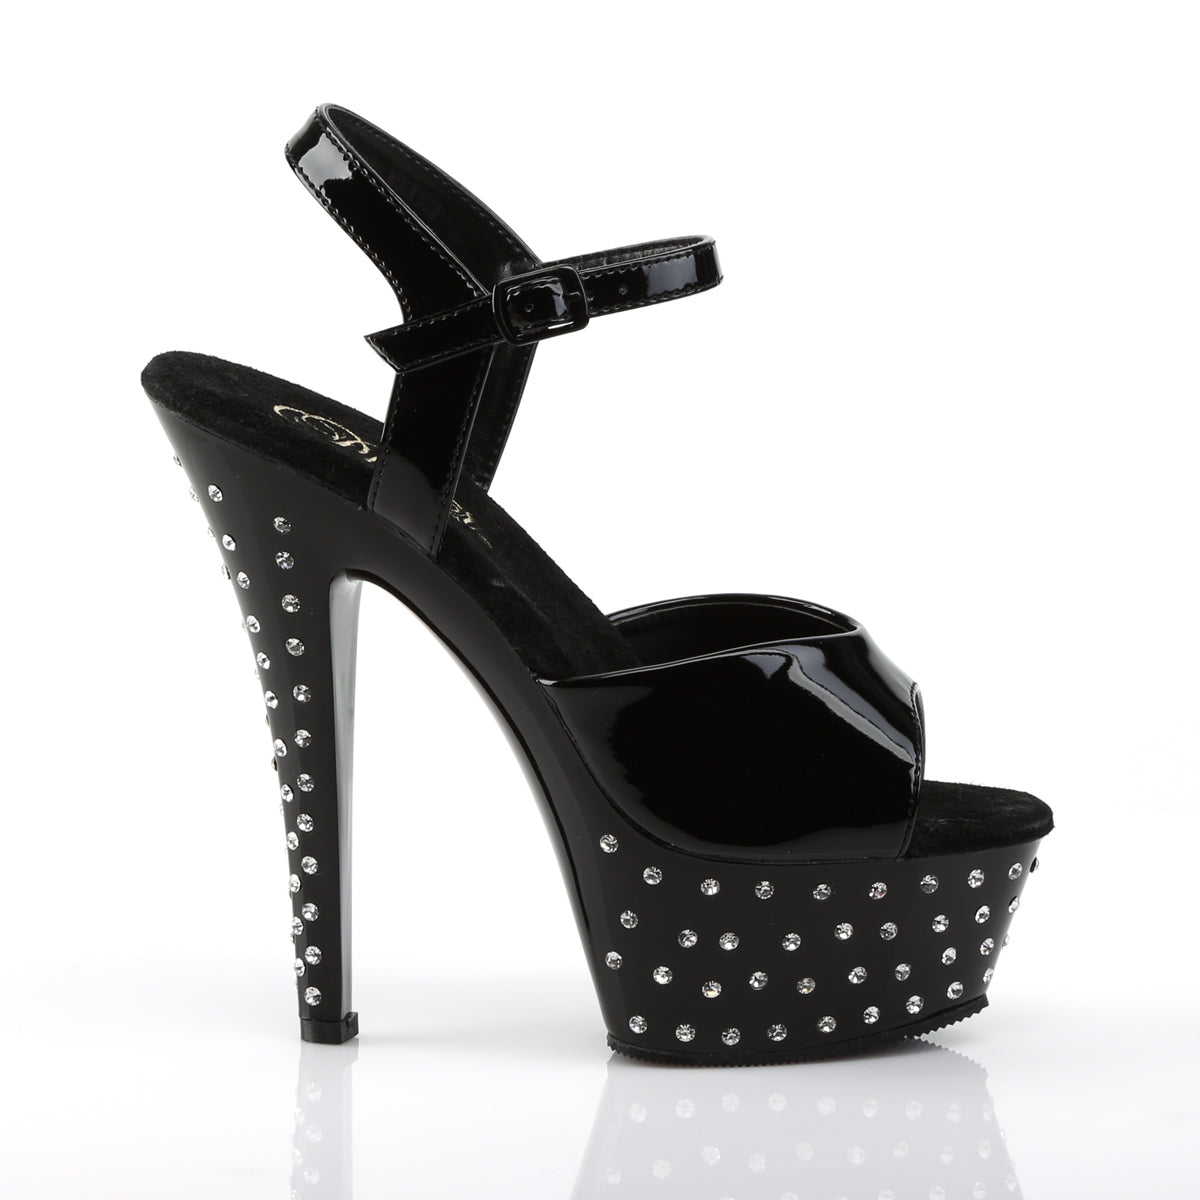 STARDUST-609 6 Inch Heel Black Patent Pole Dancing Platforms-Pleaser- Sexy Shoes Fetish Heels